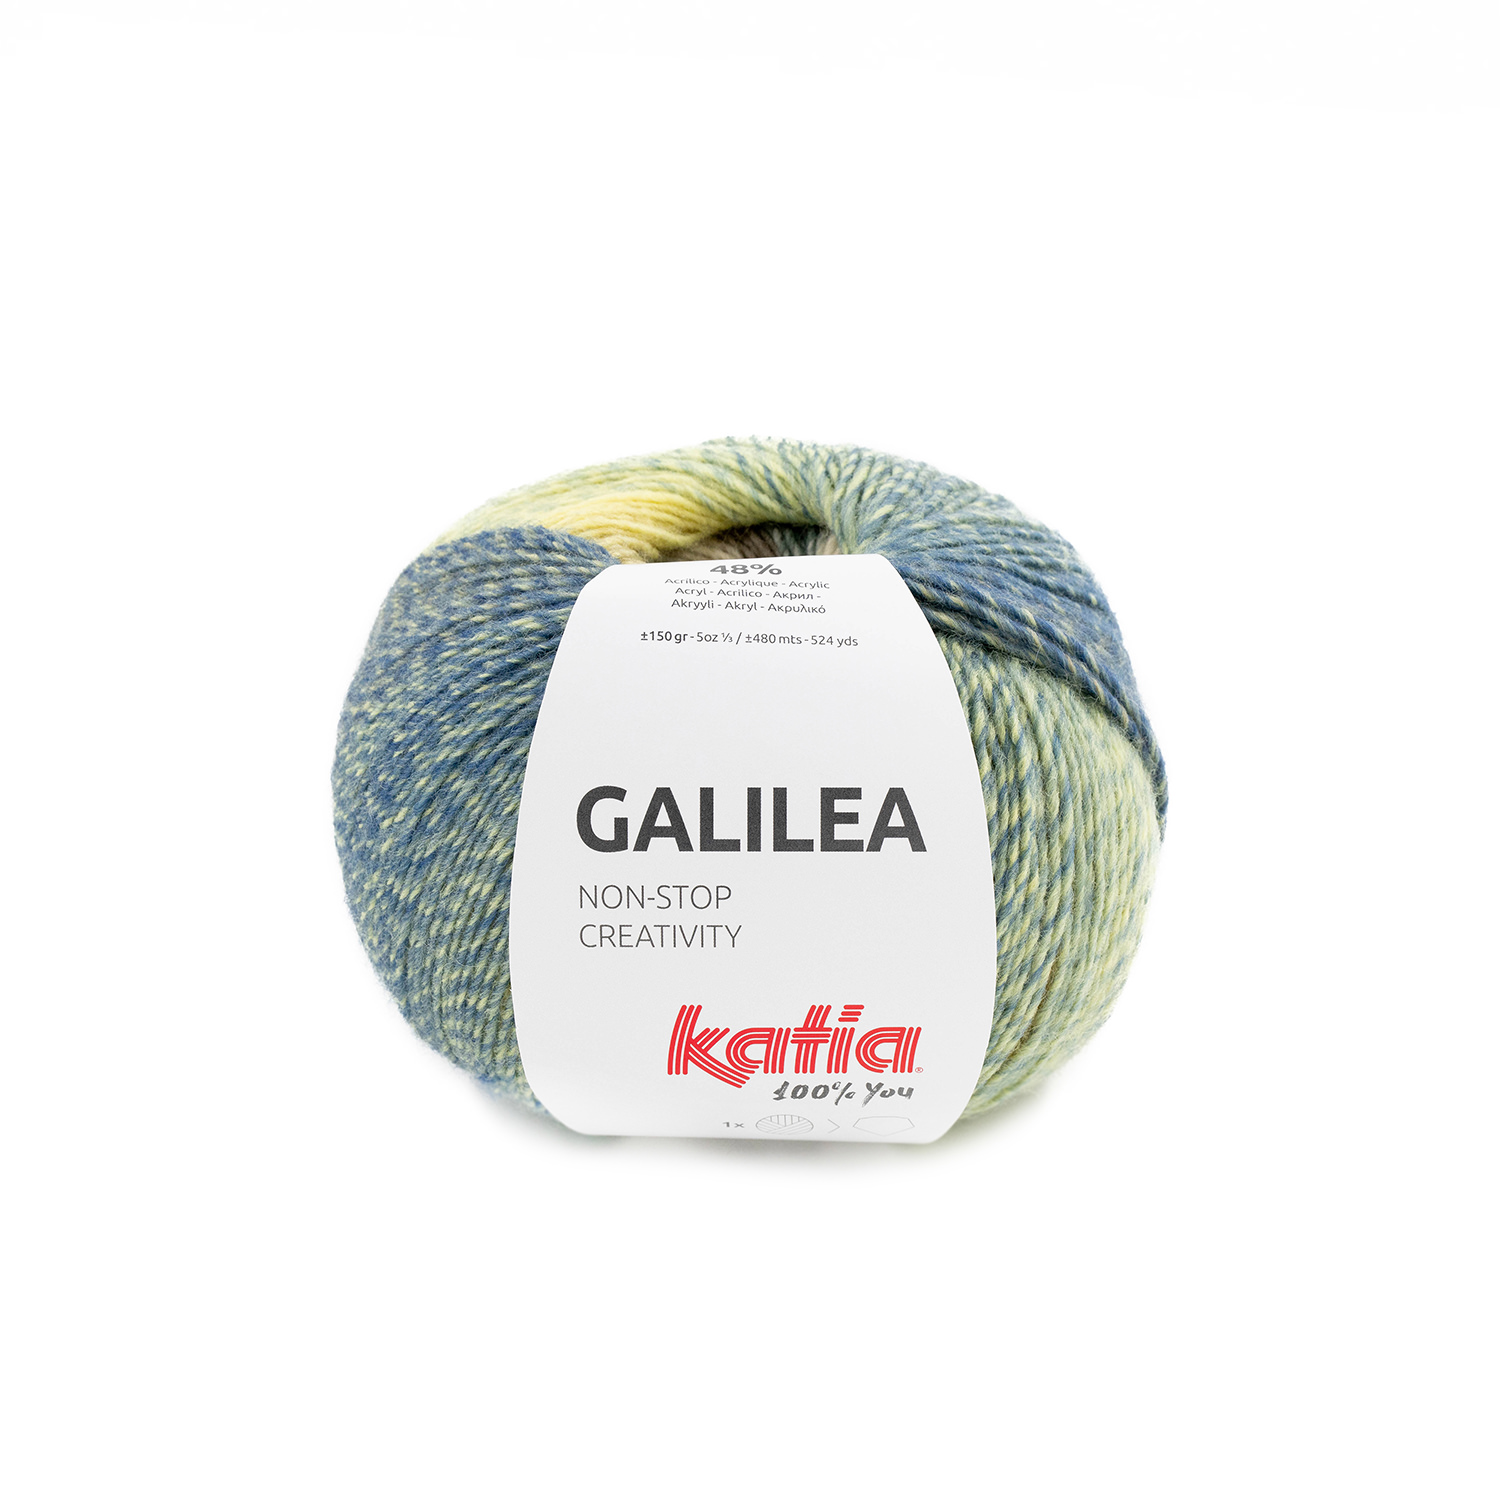 GALILEA - / Winter - garens Katia.com